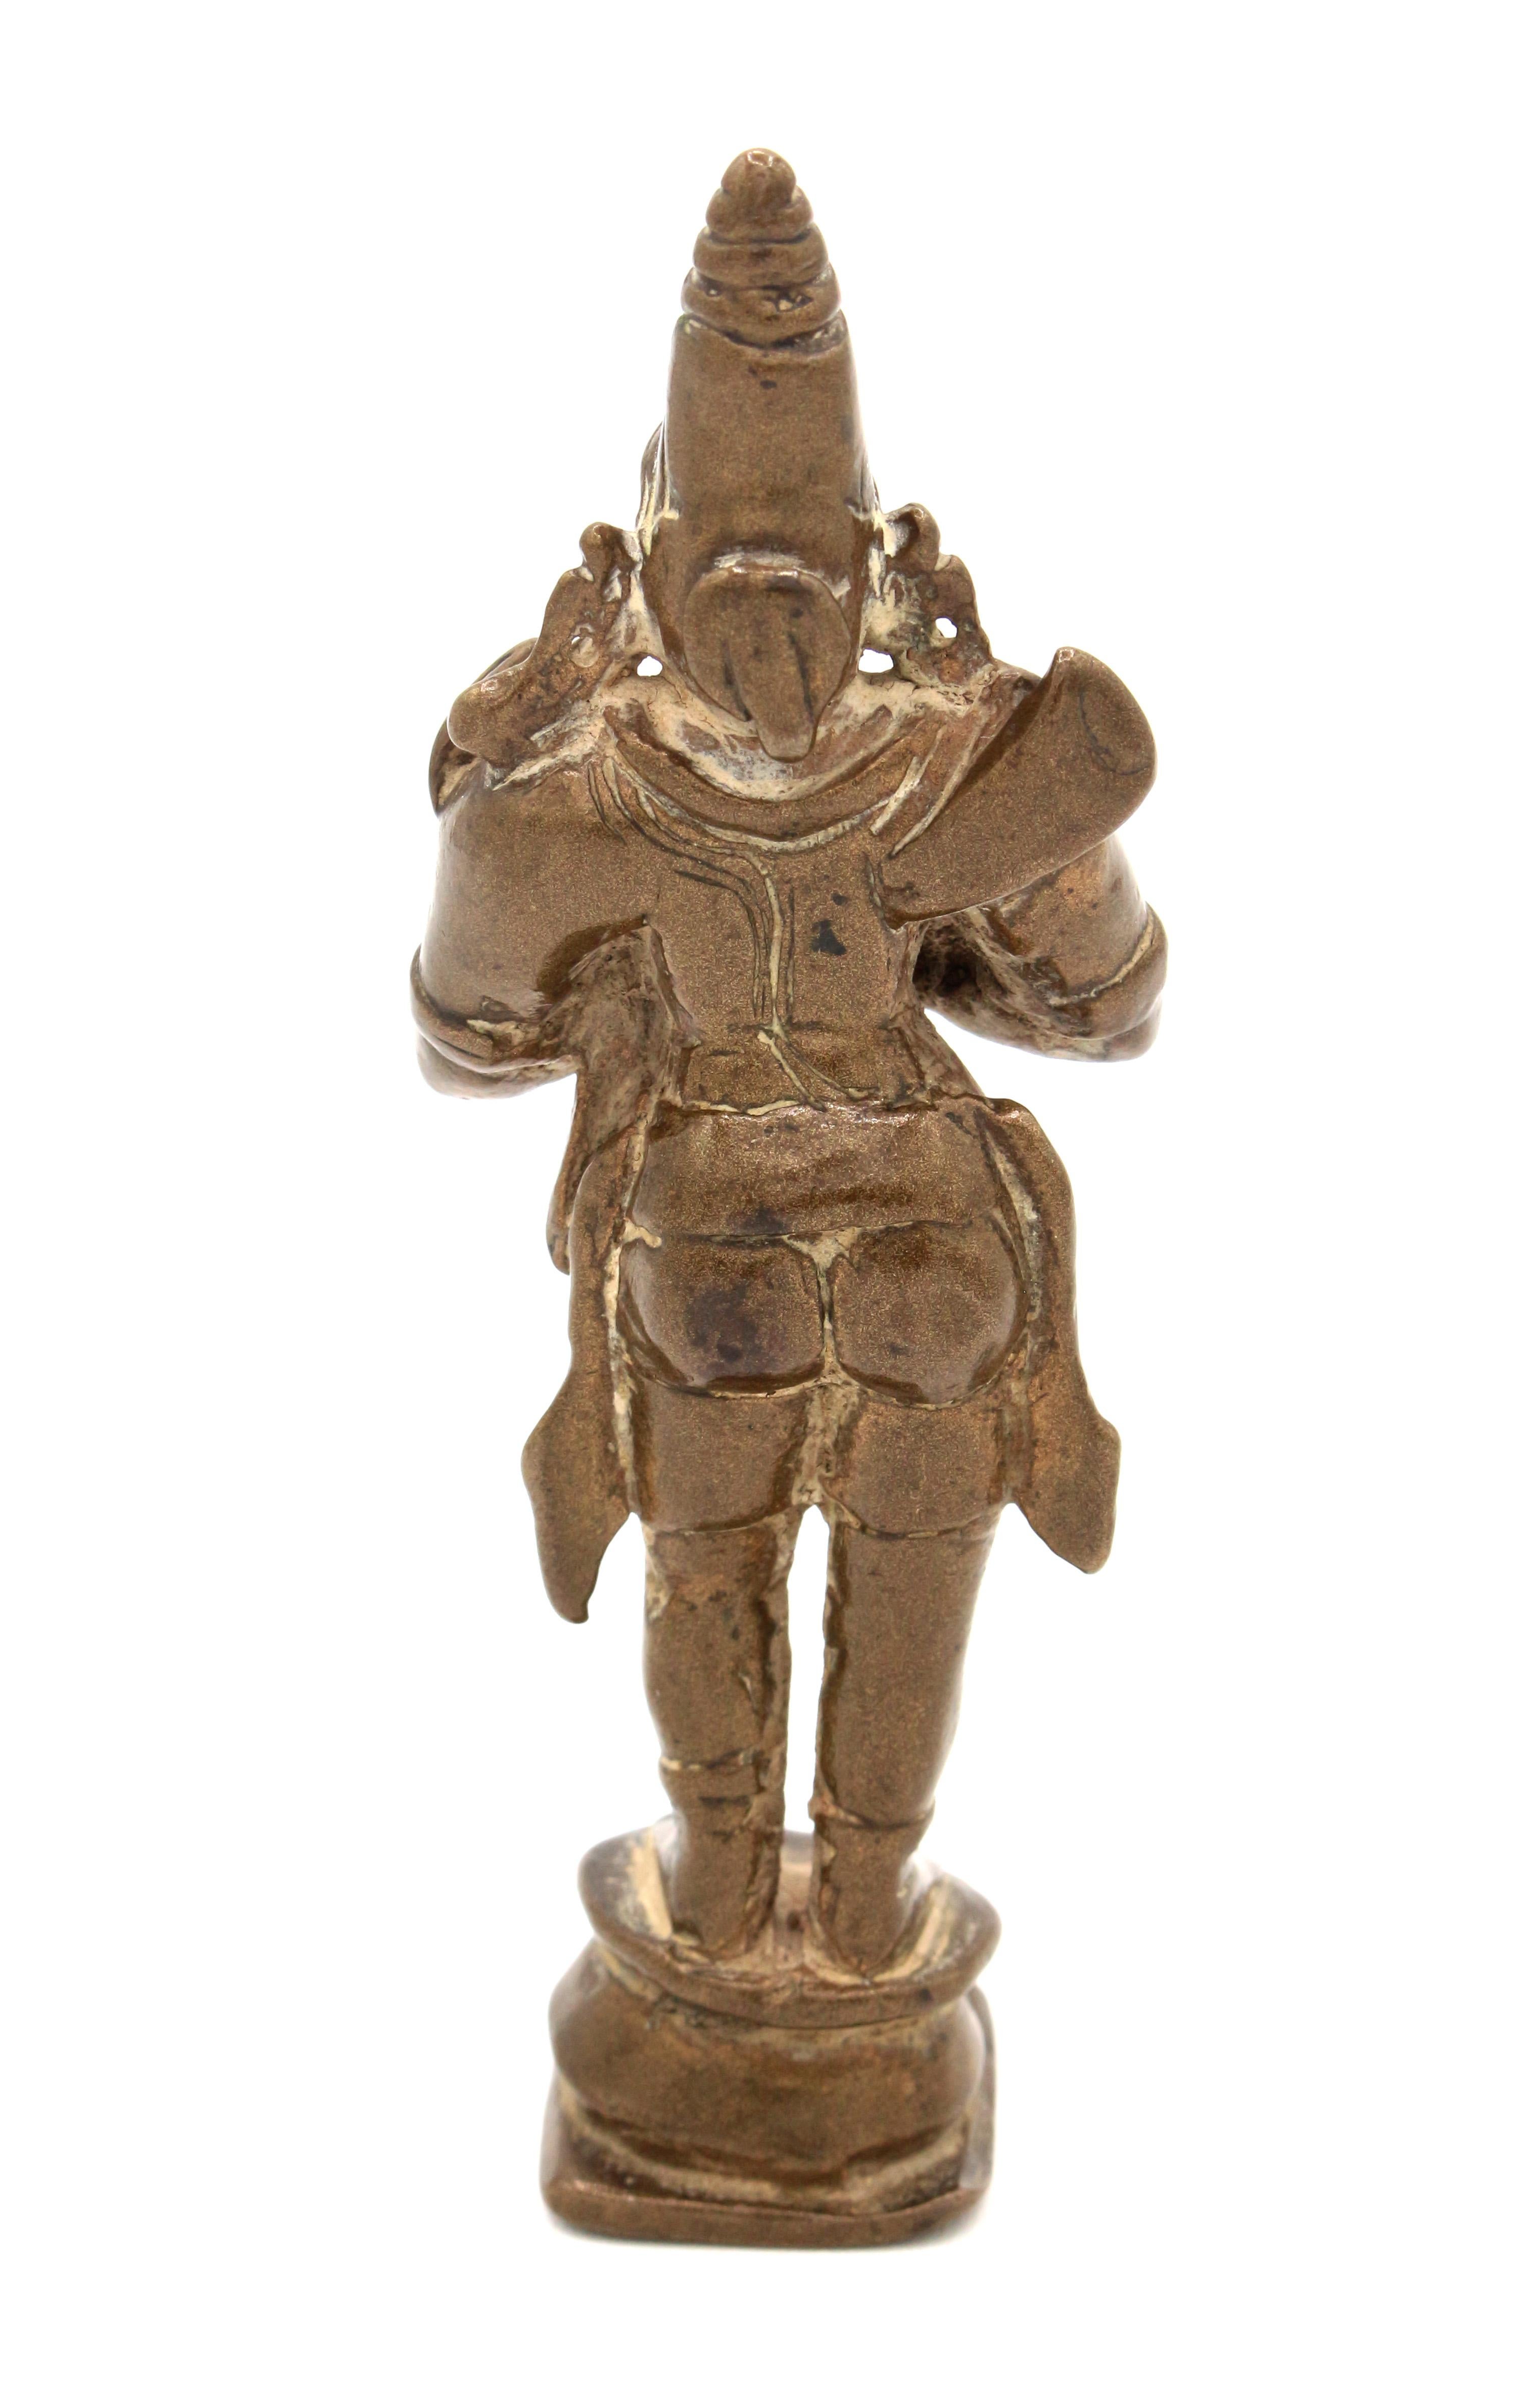 Small bronze serene standing figure, a Hindu God, lost wax casting. 19th Century. 1 1/2